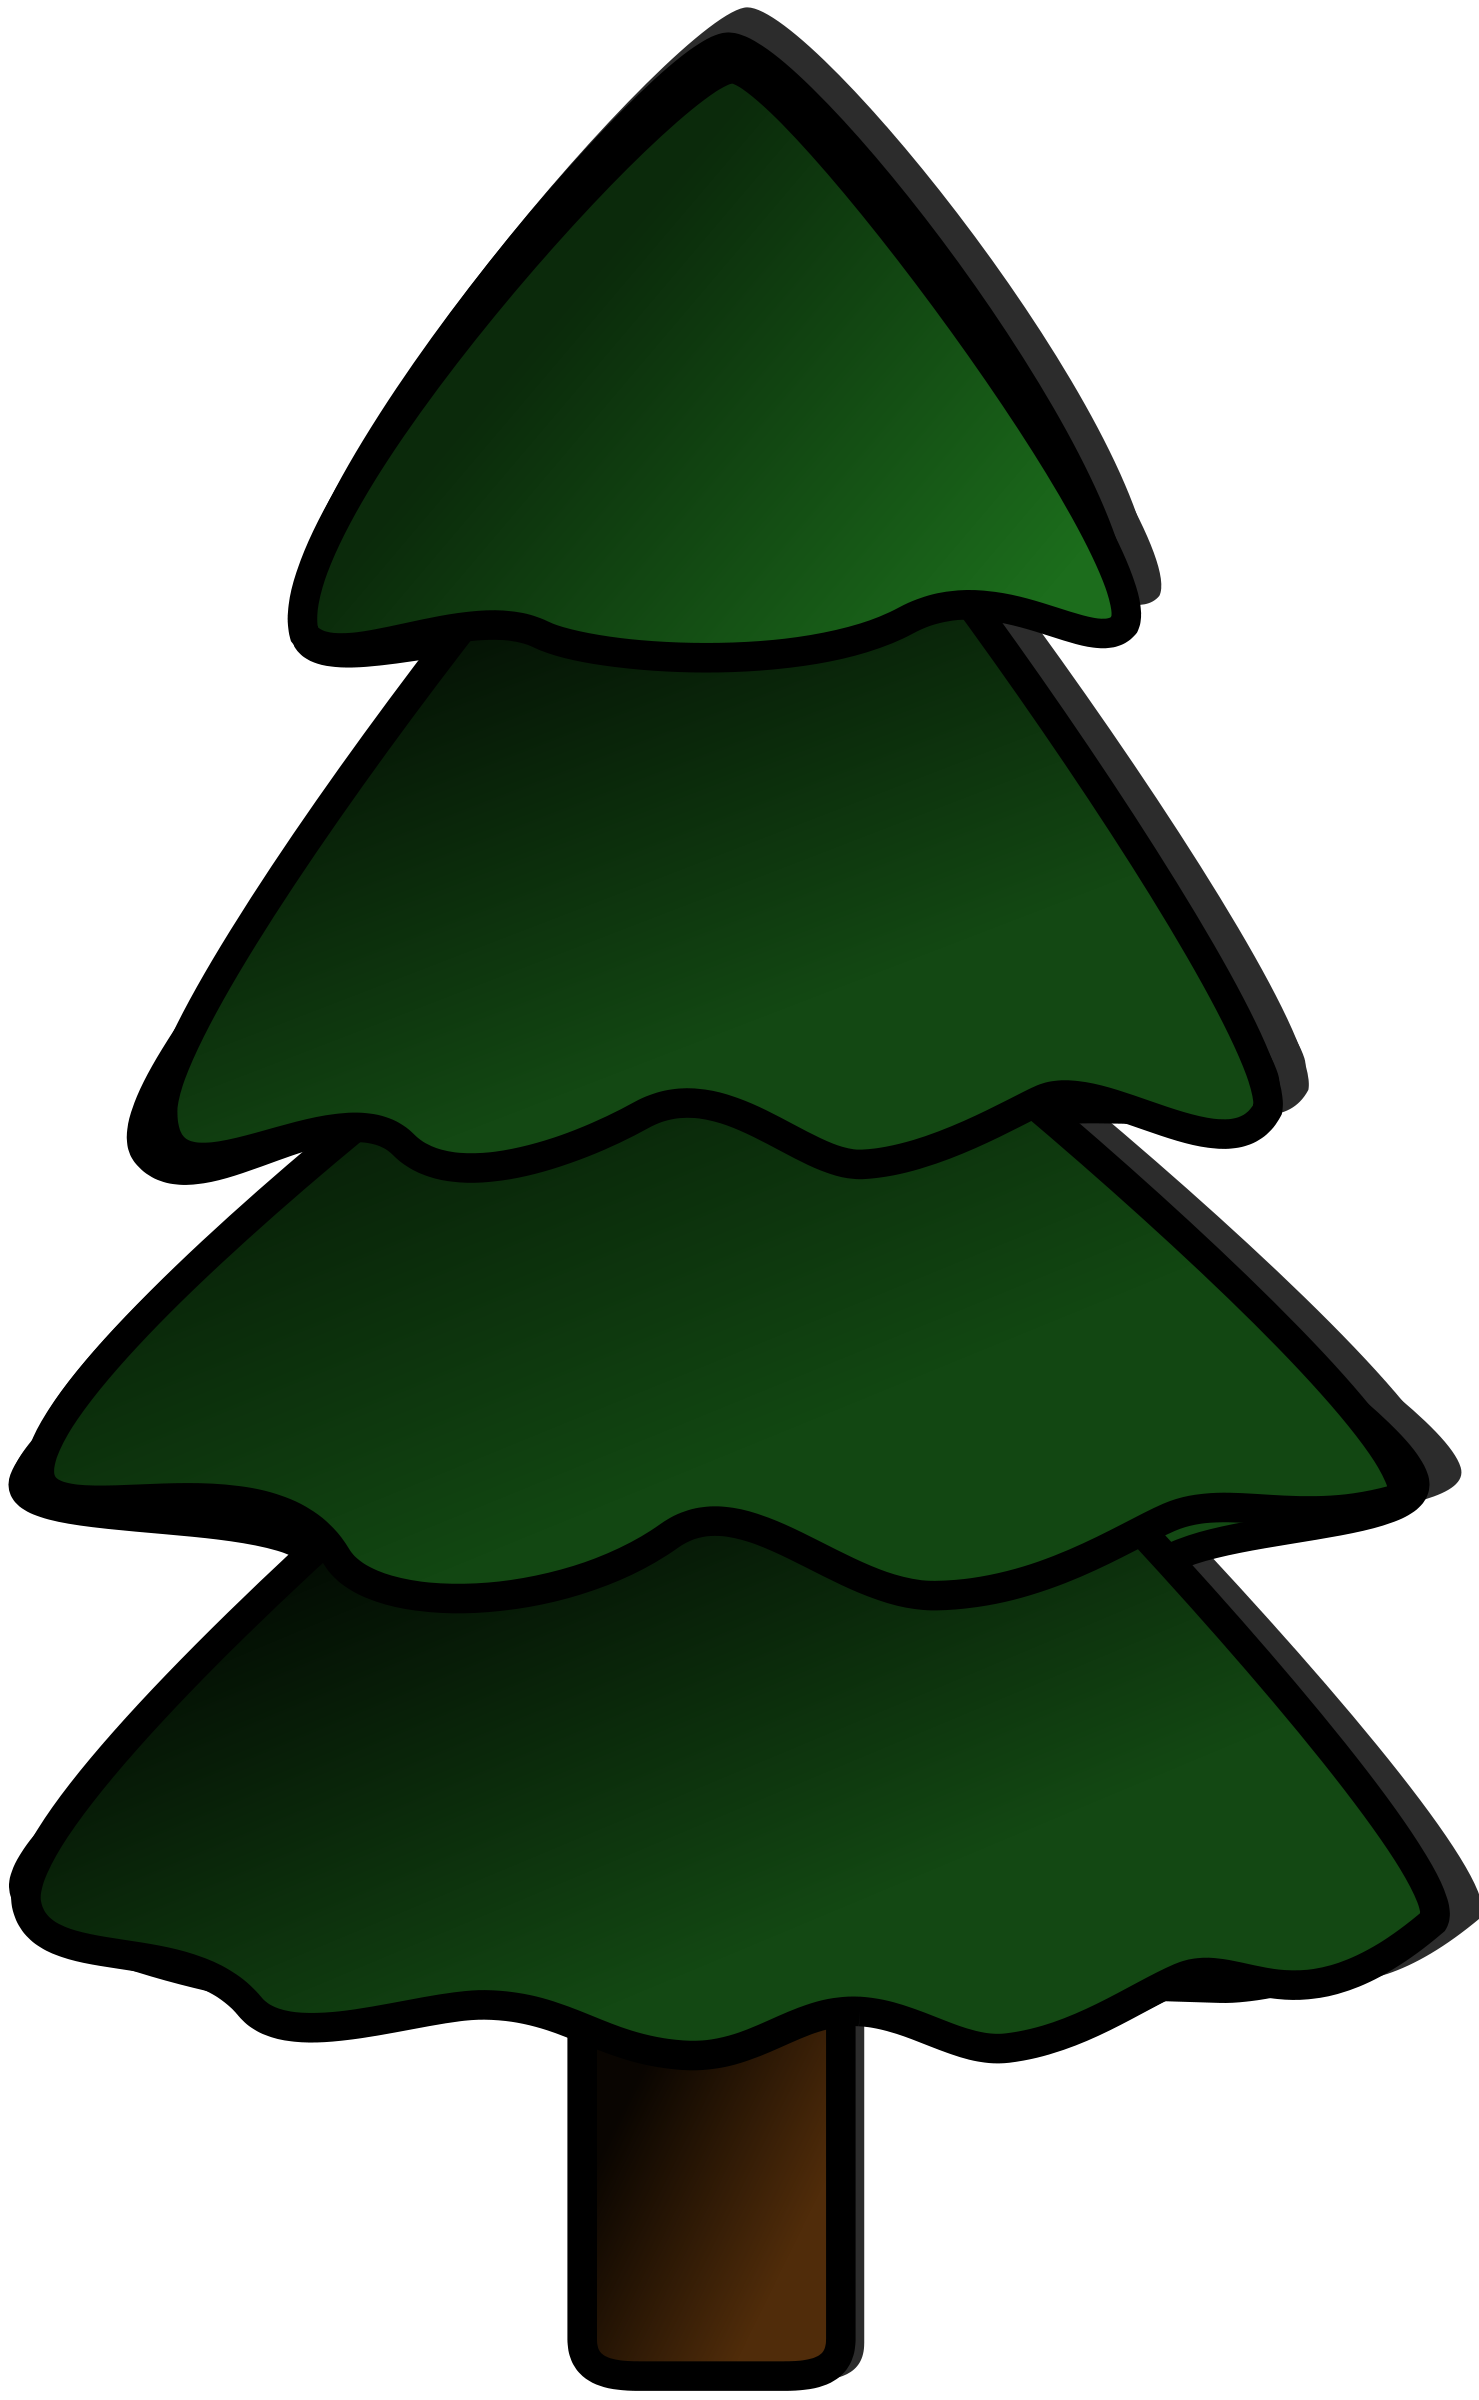 Pine tree logo clipart